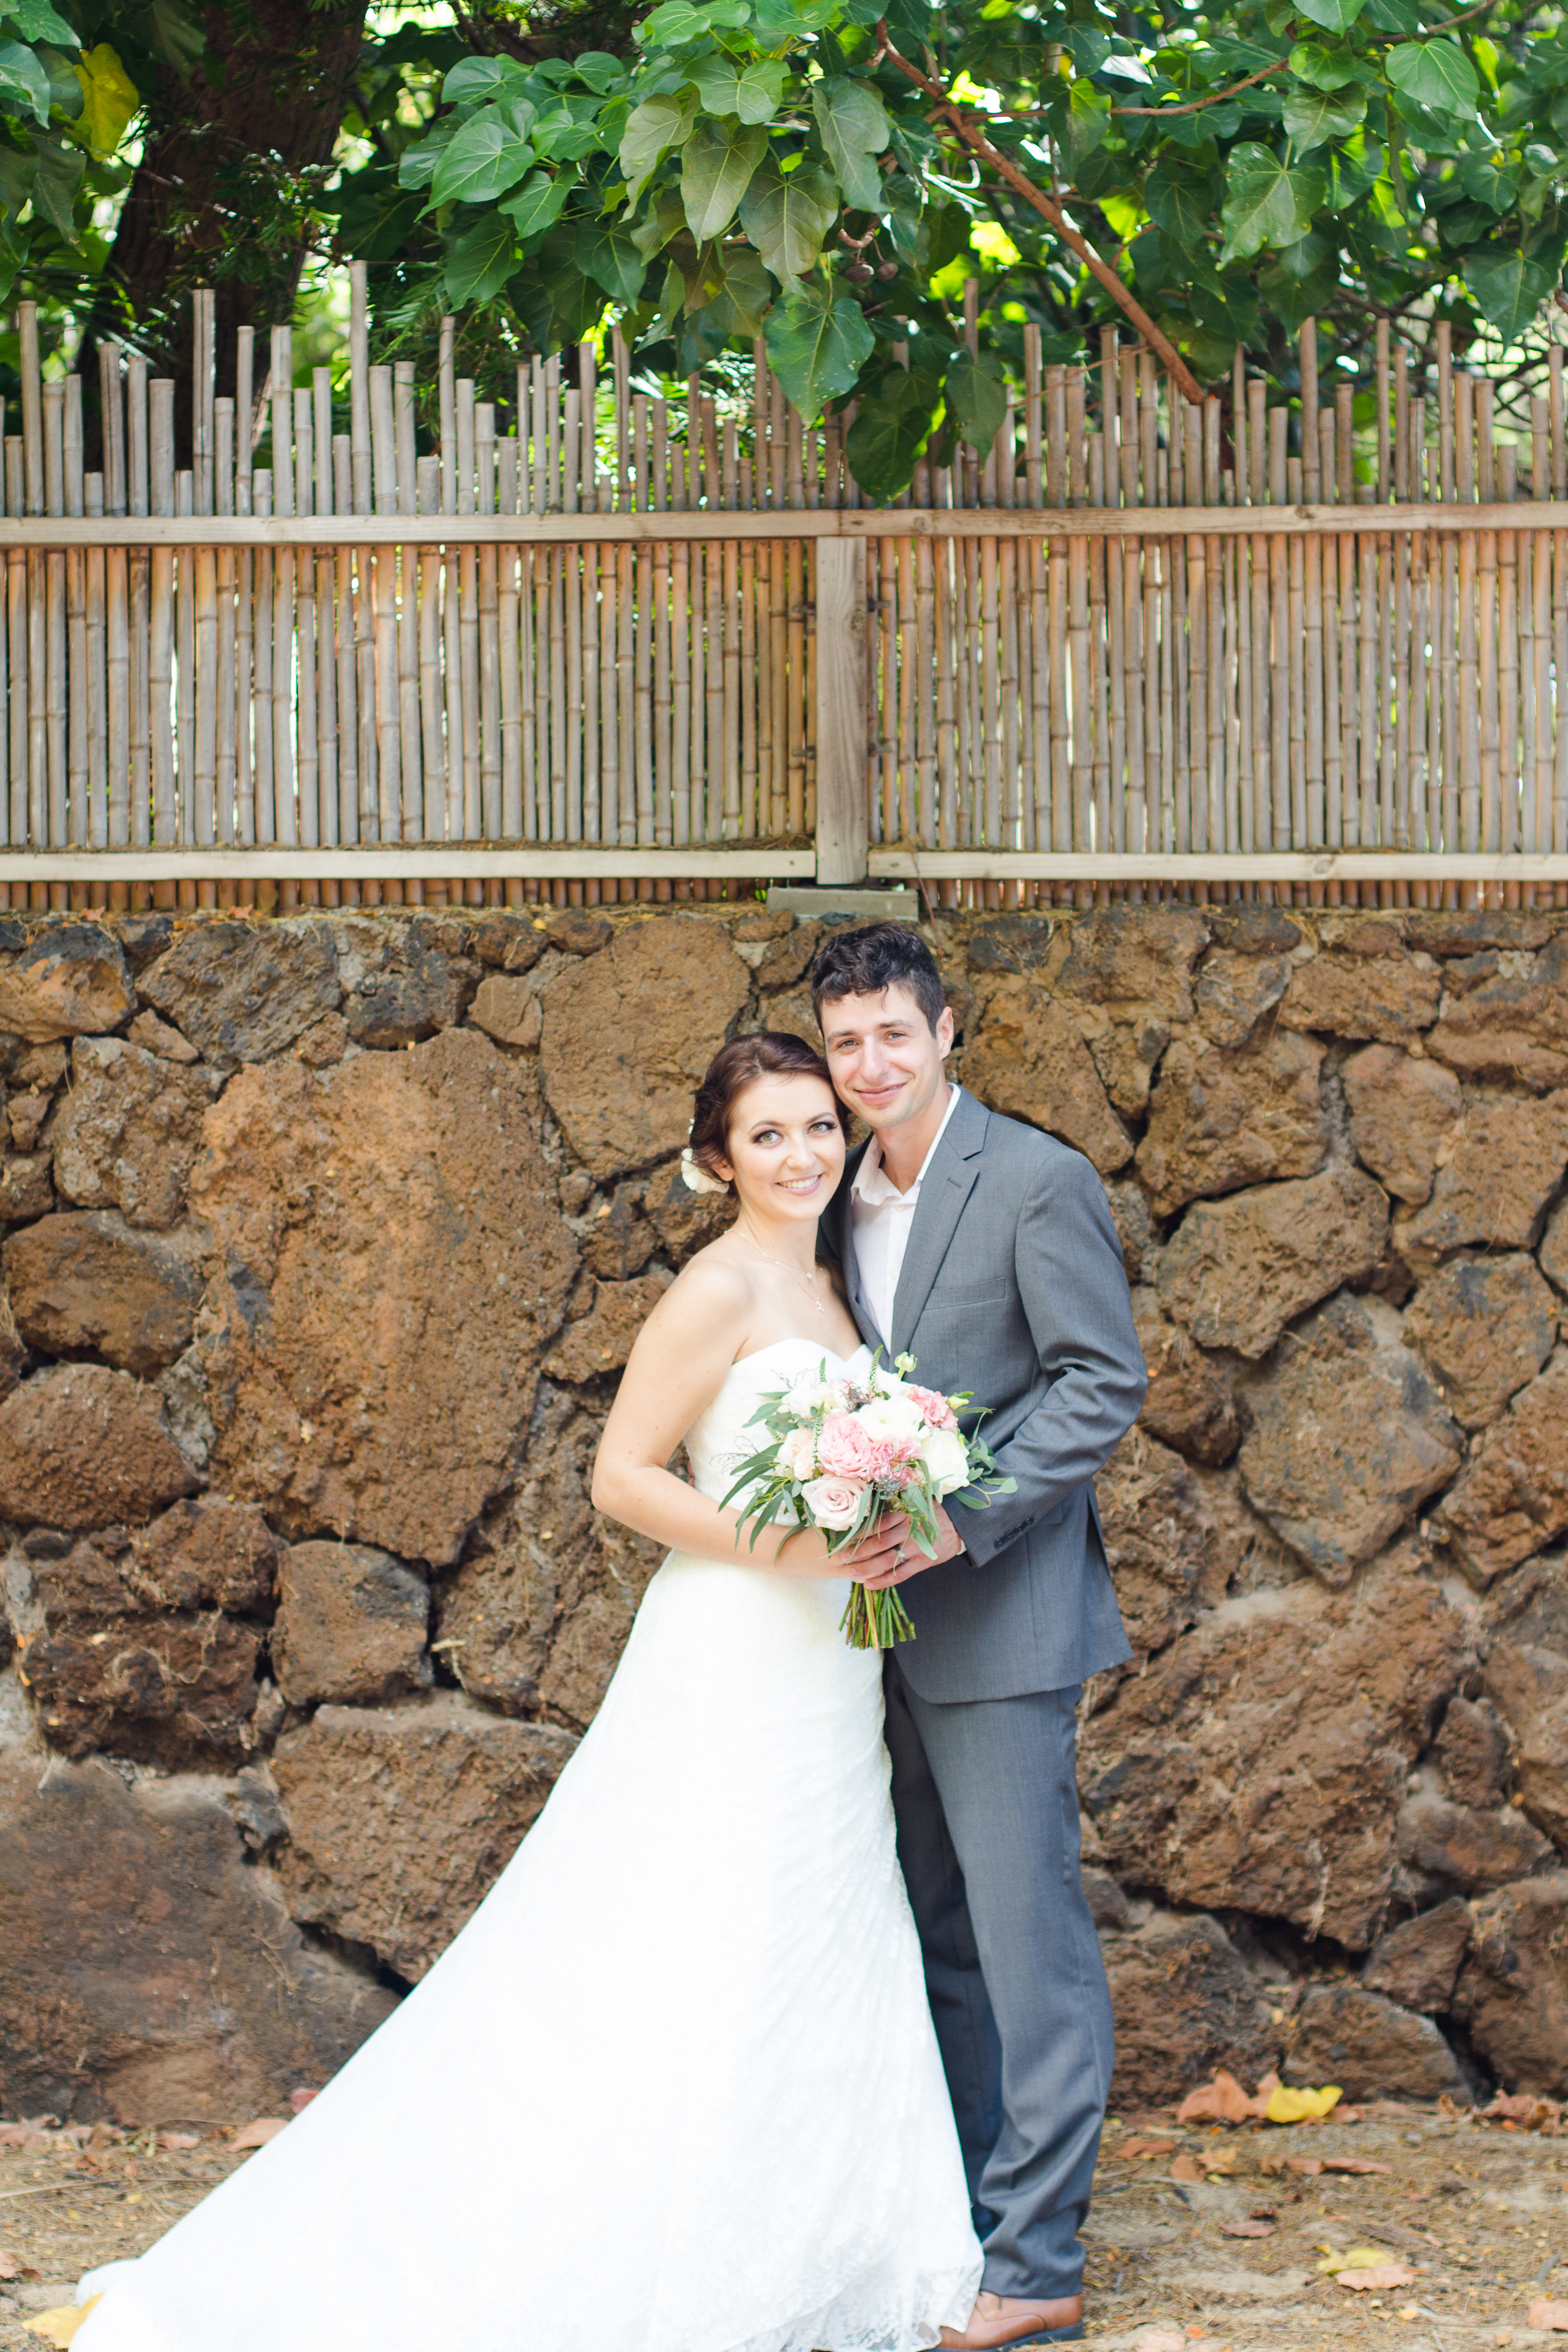 Hawaii Destination Wedding - Karen Elise Photography